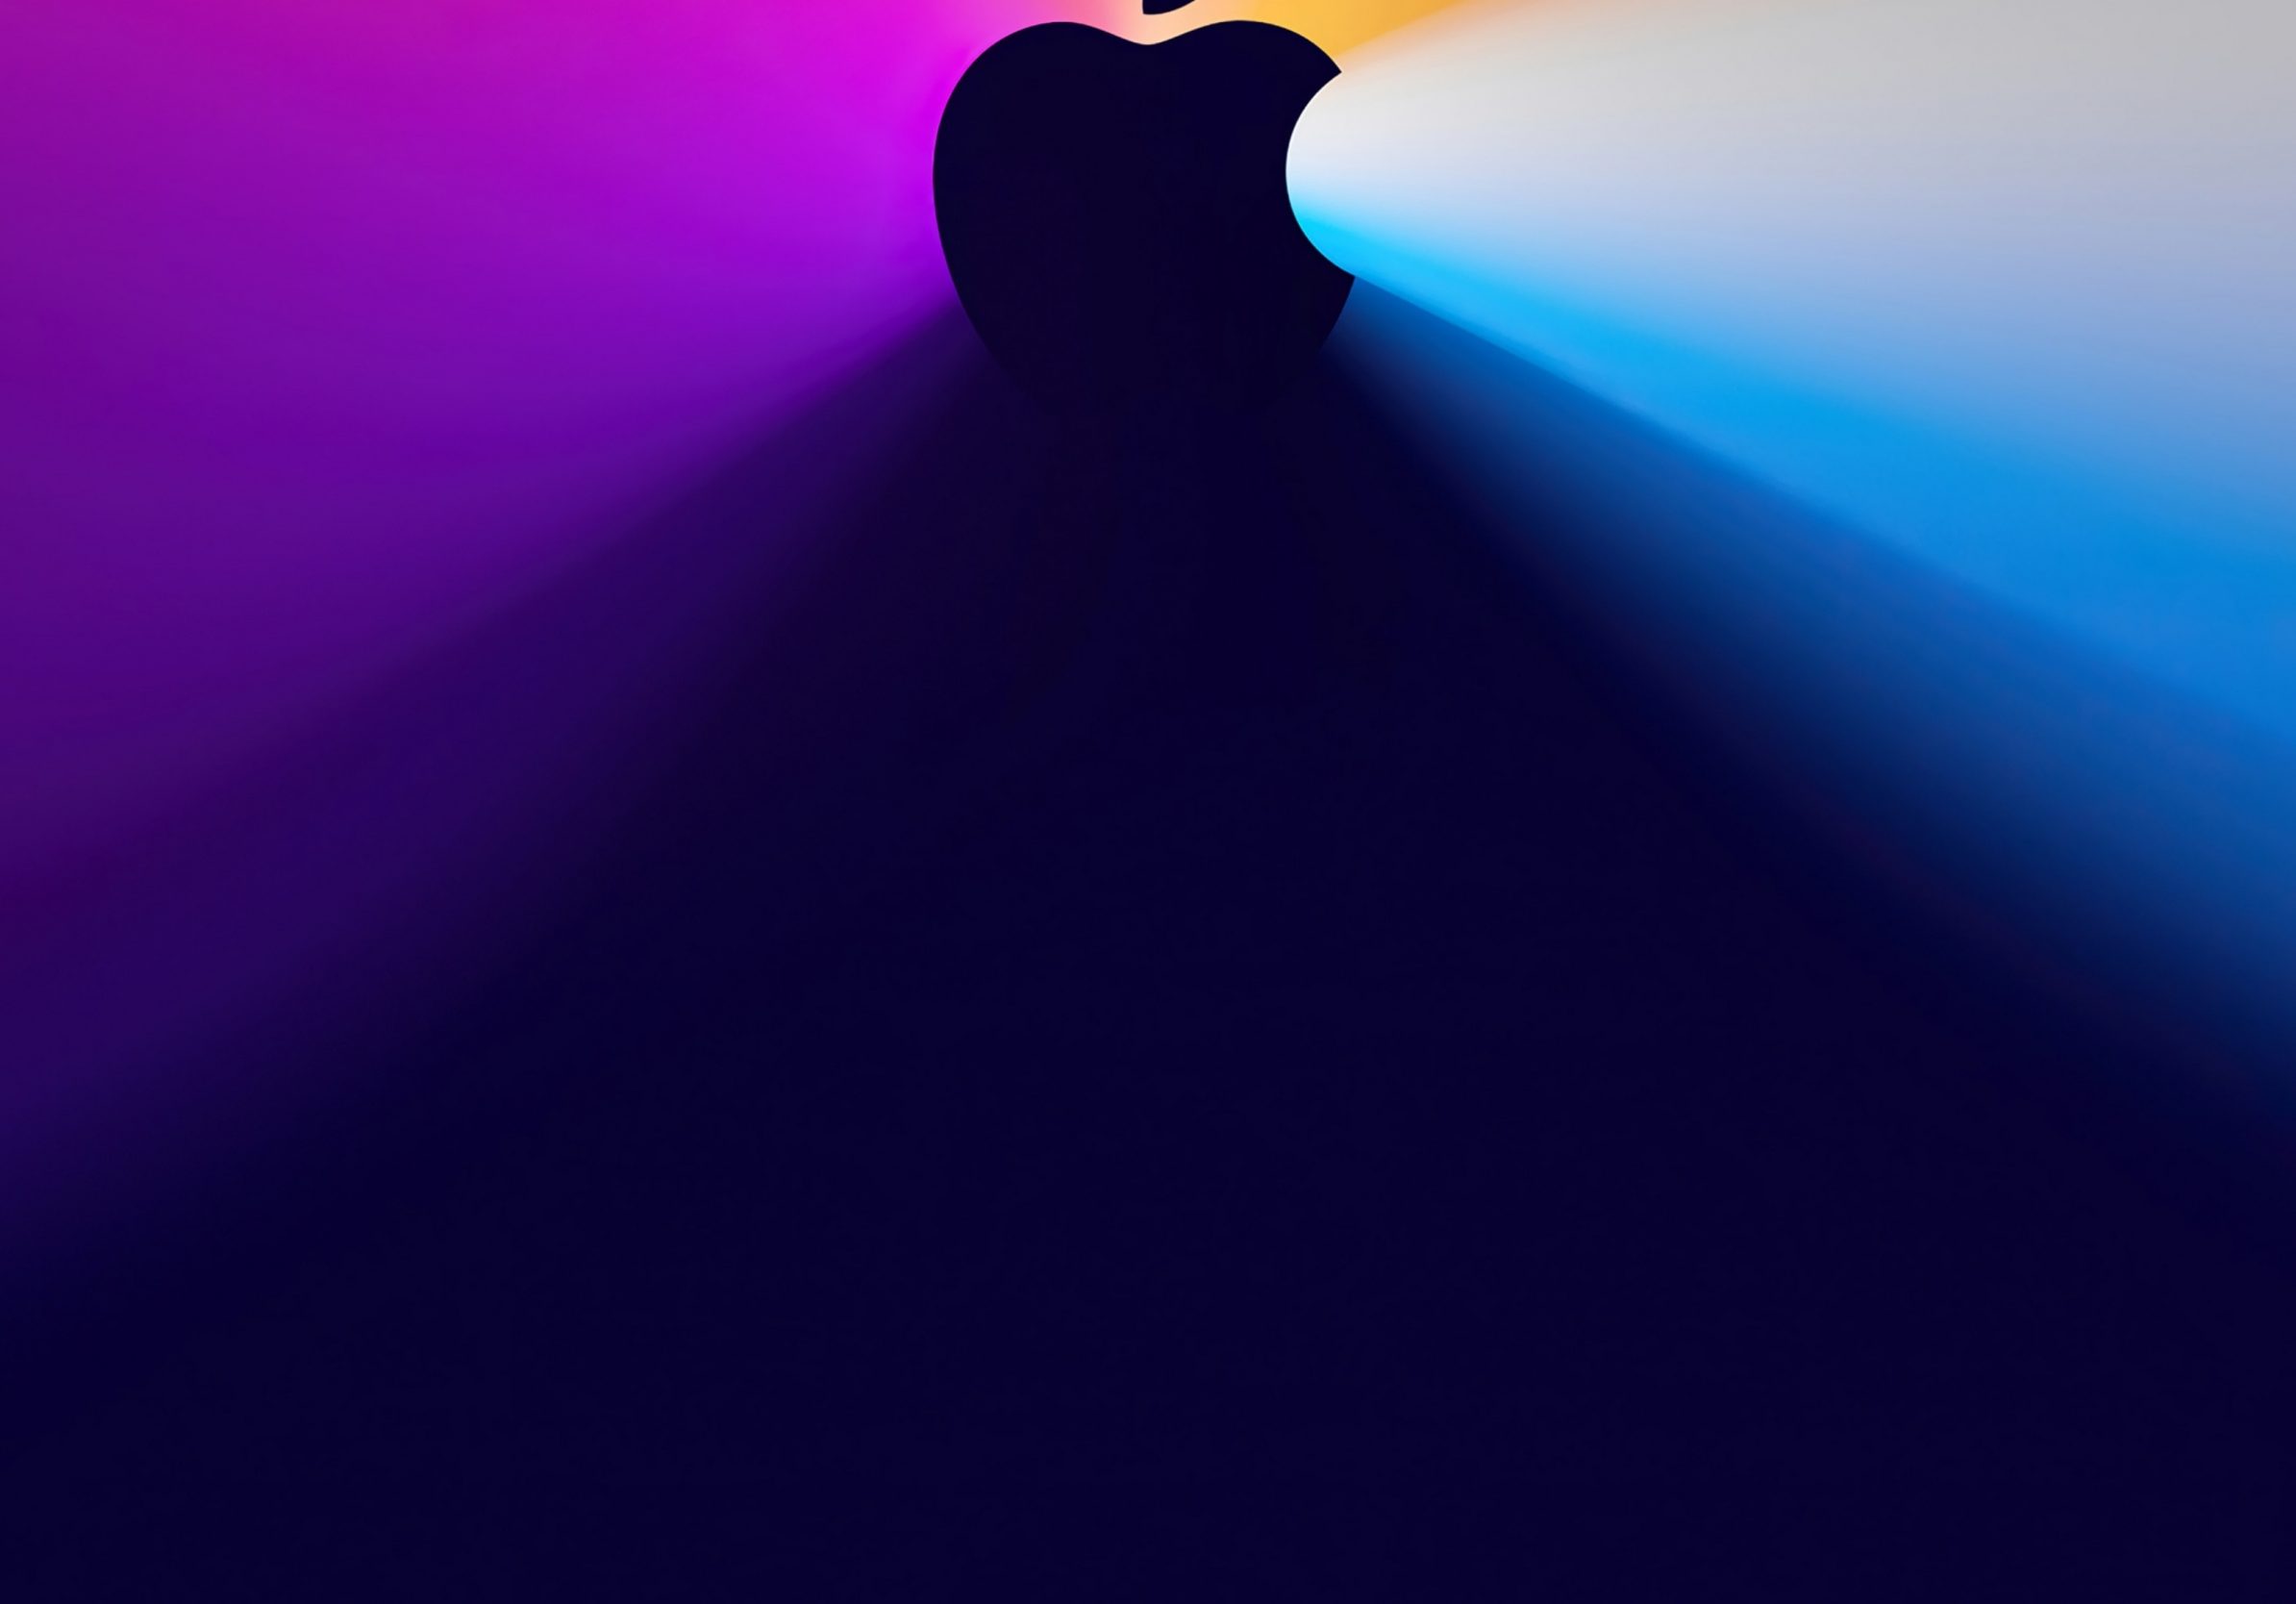 2388x1668 iPad Pro wallpapers Colourful iPhone 12 Apple Logo iPad Wallpaper 2388x1668 pixels resolution